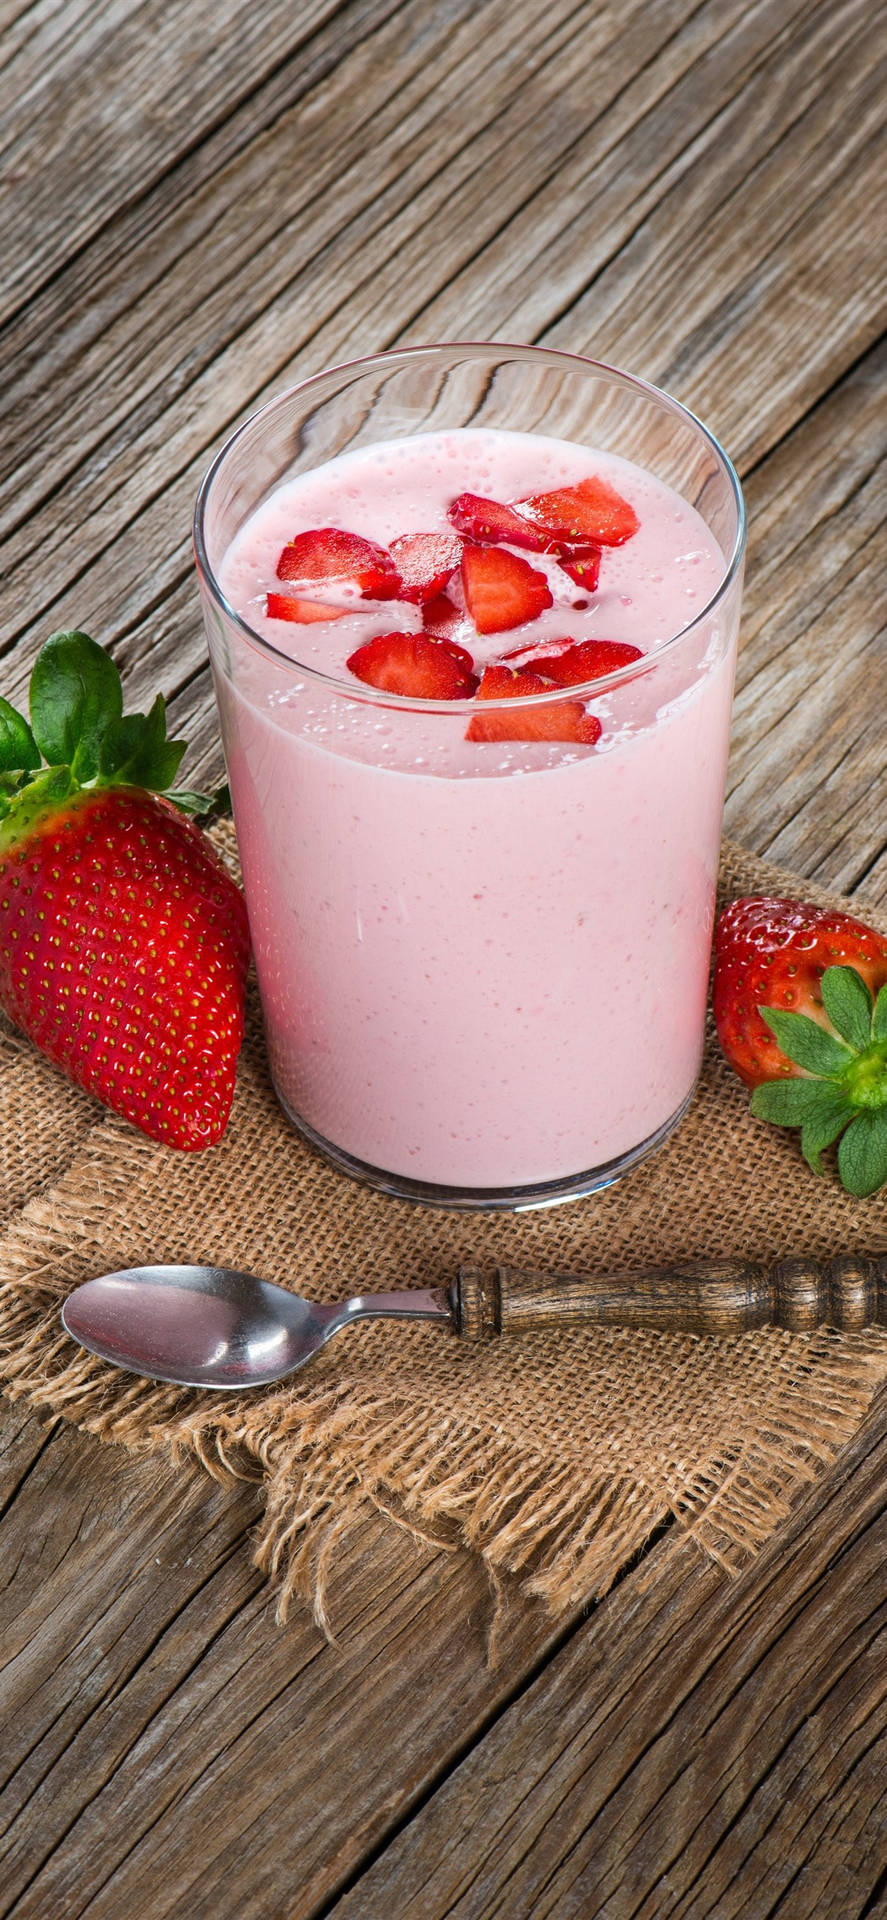 Enchanting Strawberry Milk Smoothie Background